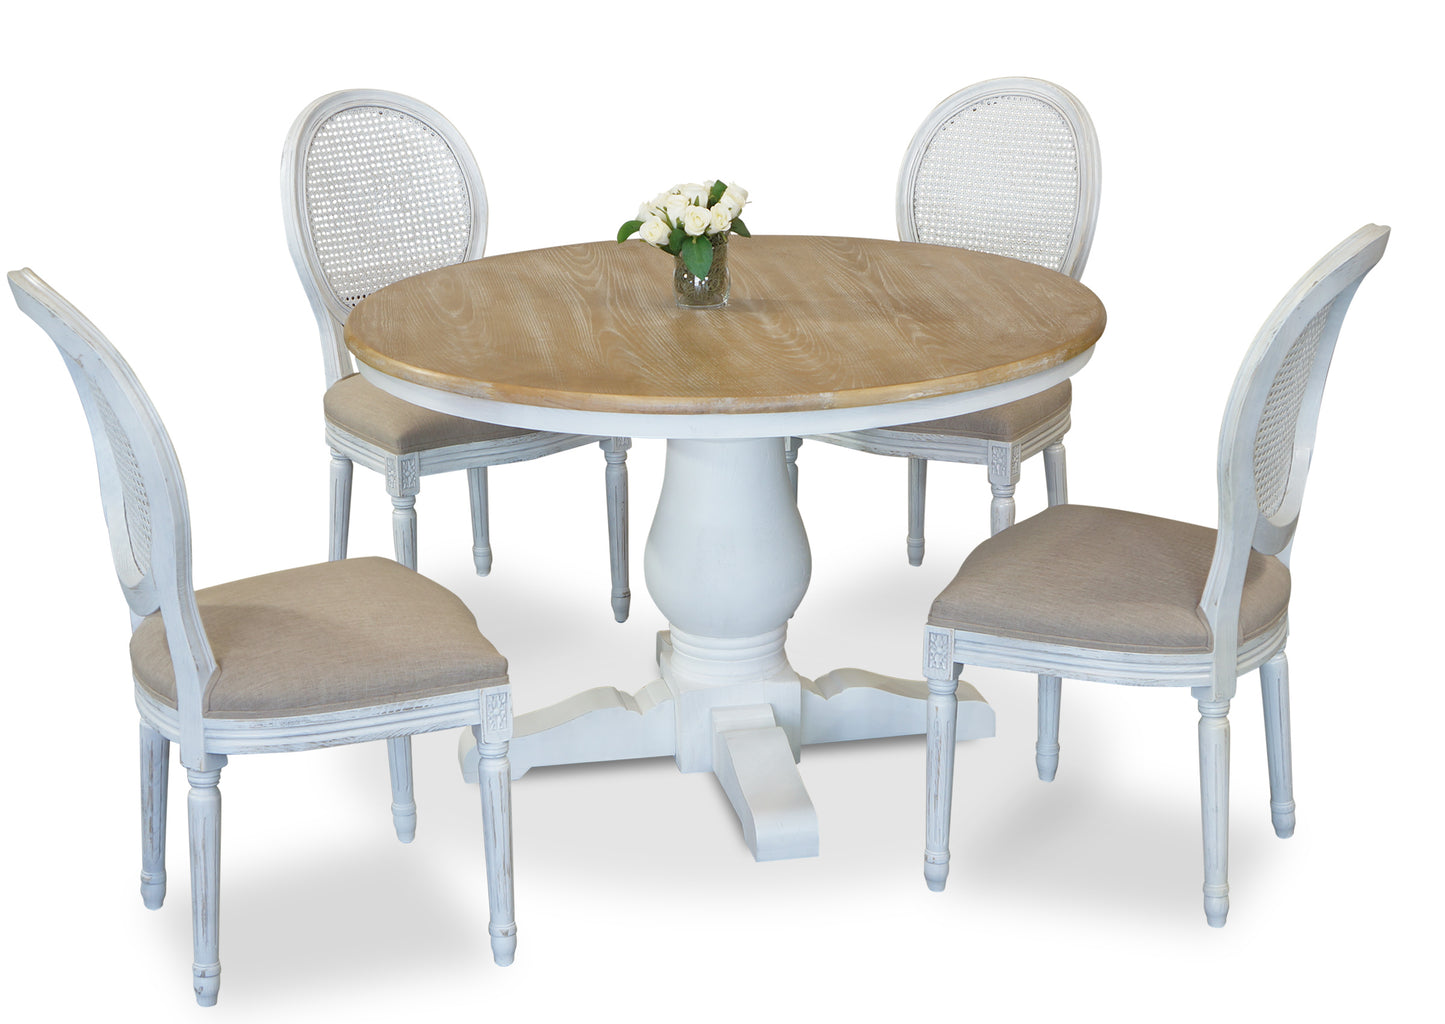 Parisienne Dining Table - White & Oak (1200mm)